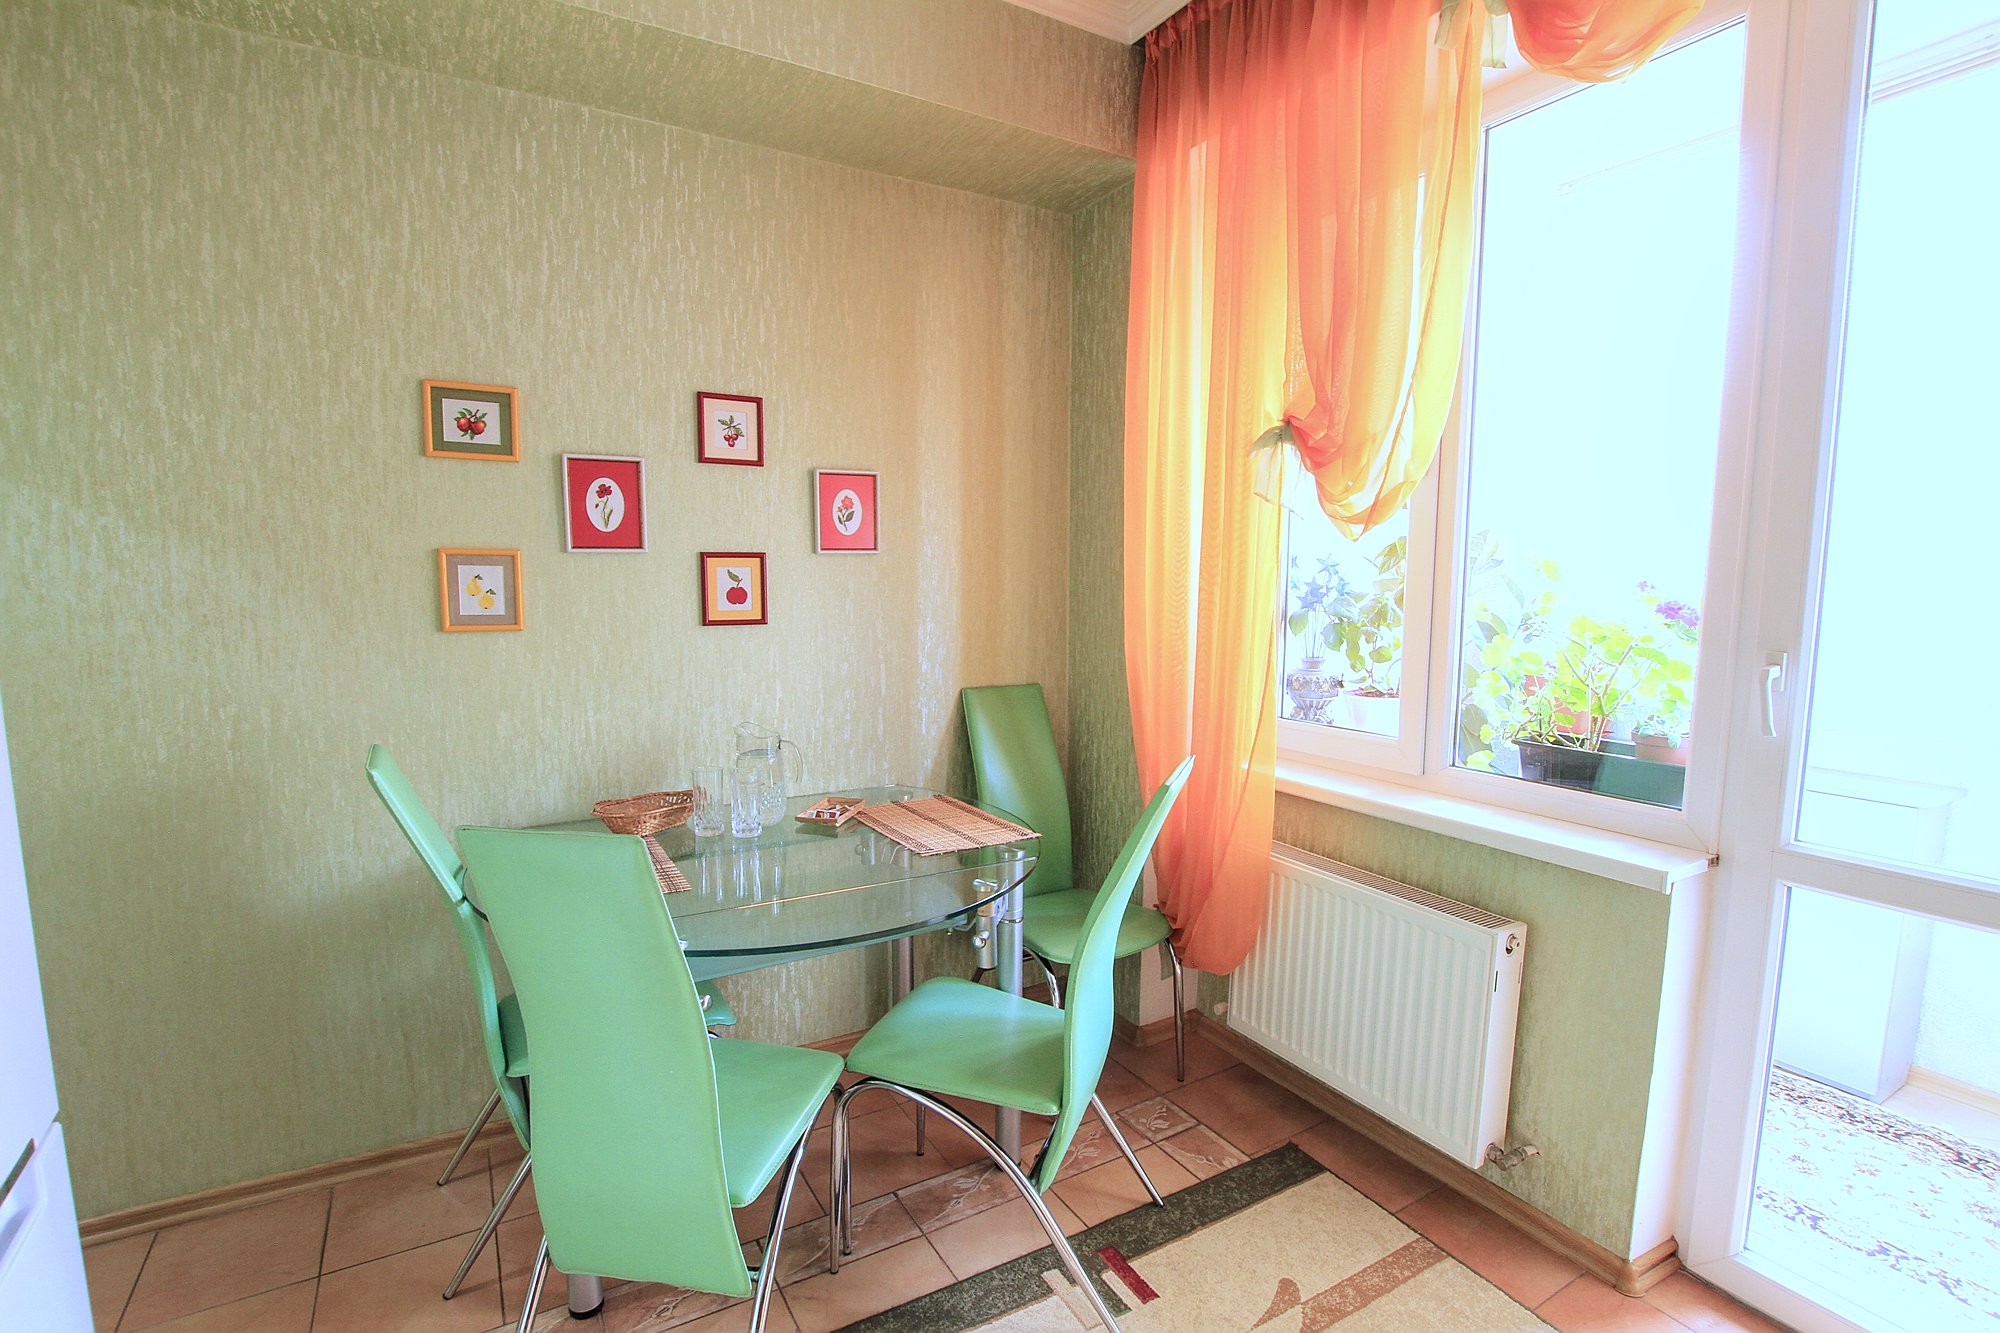 Anestiade Studio ist ein 1 Zimmer Apartment zur Miete in Chisinau, Moldova